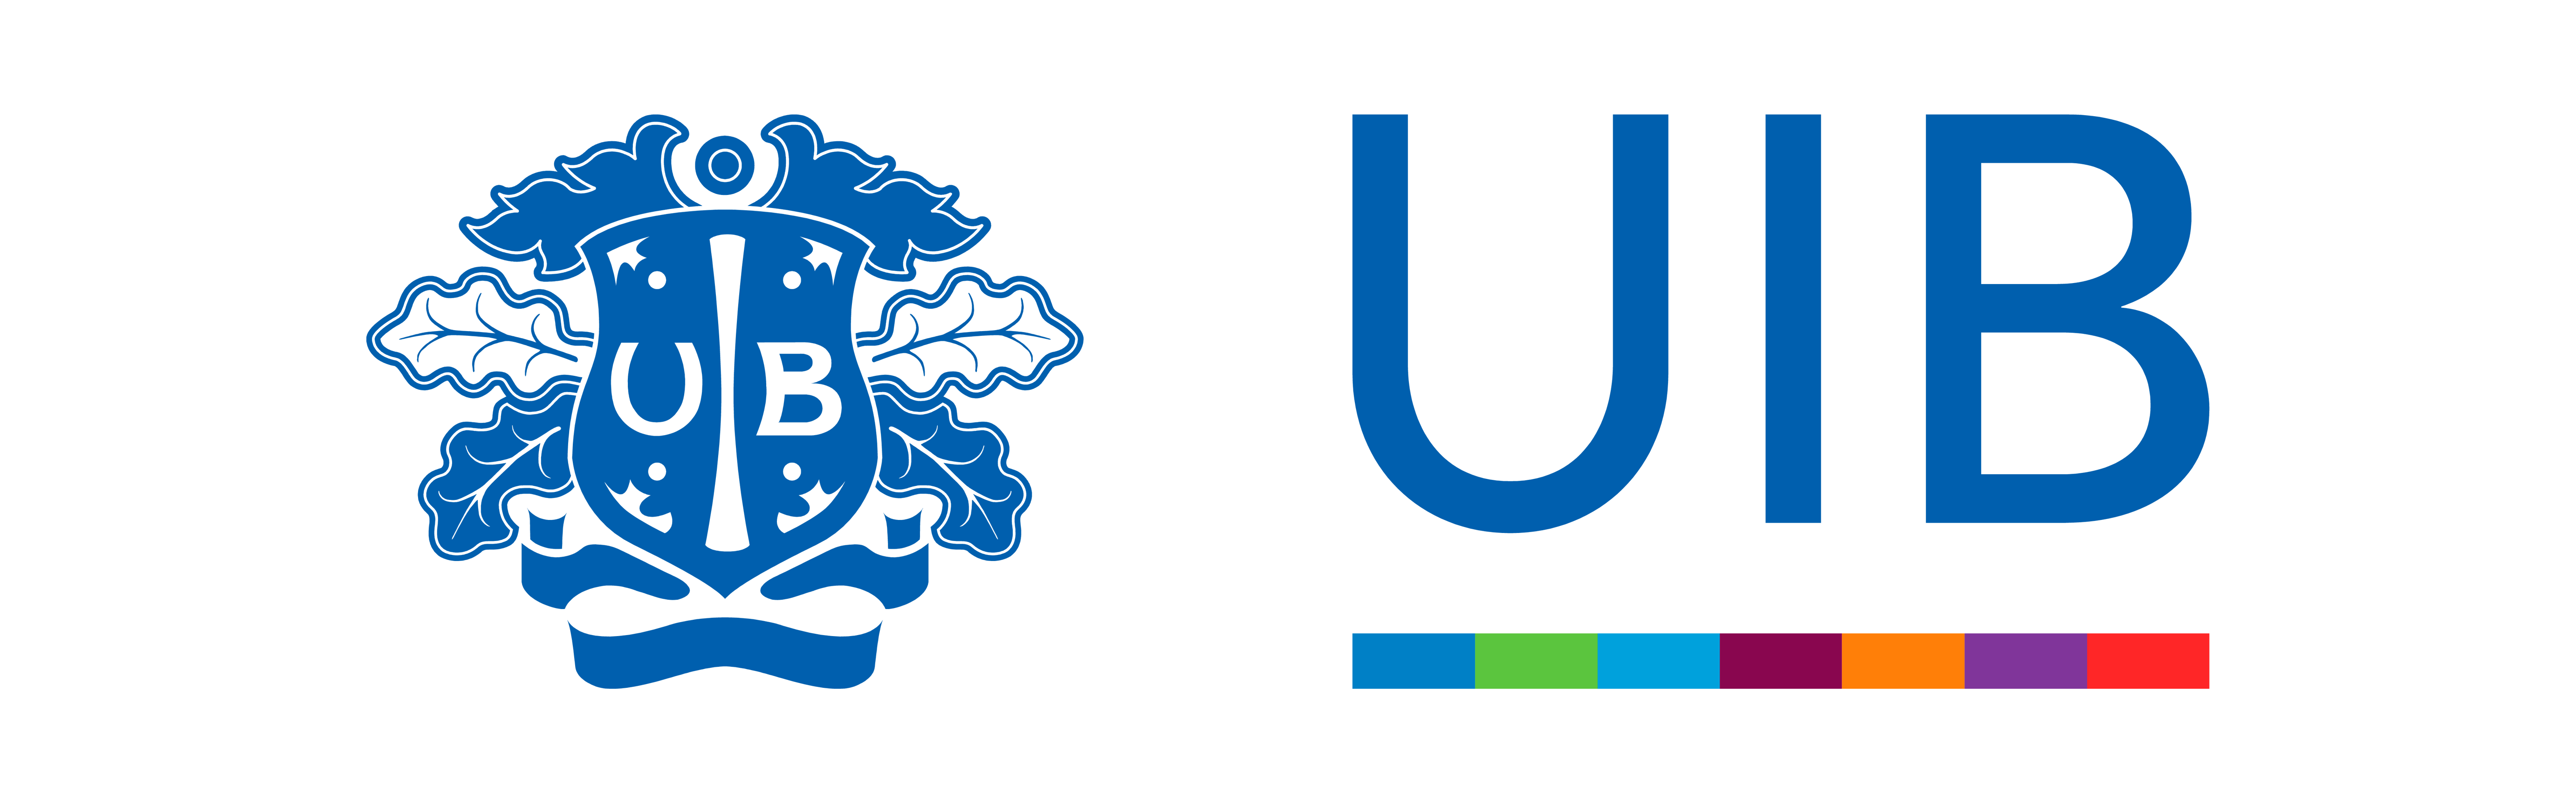 UIB Group